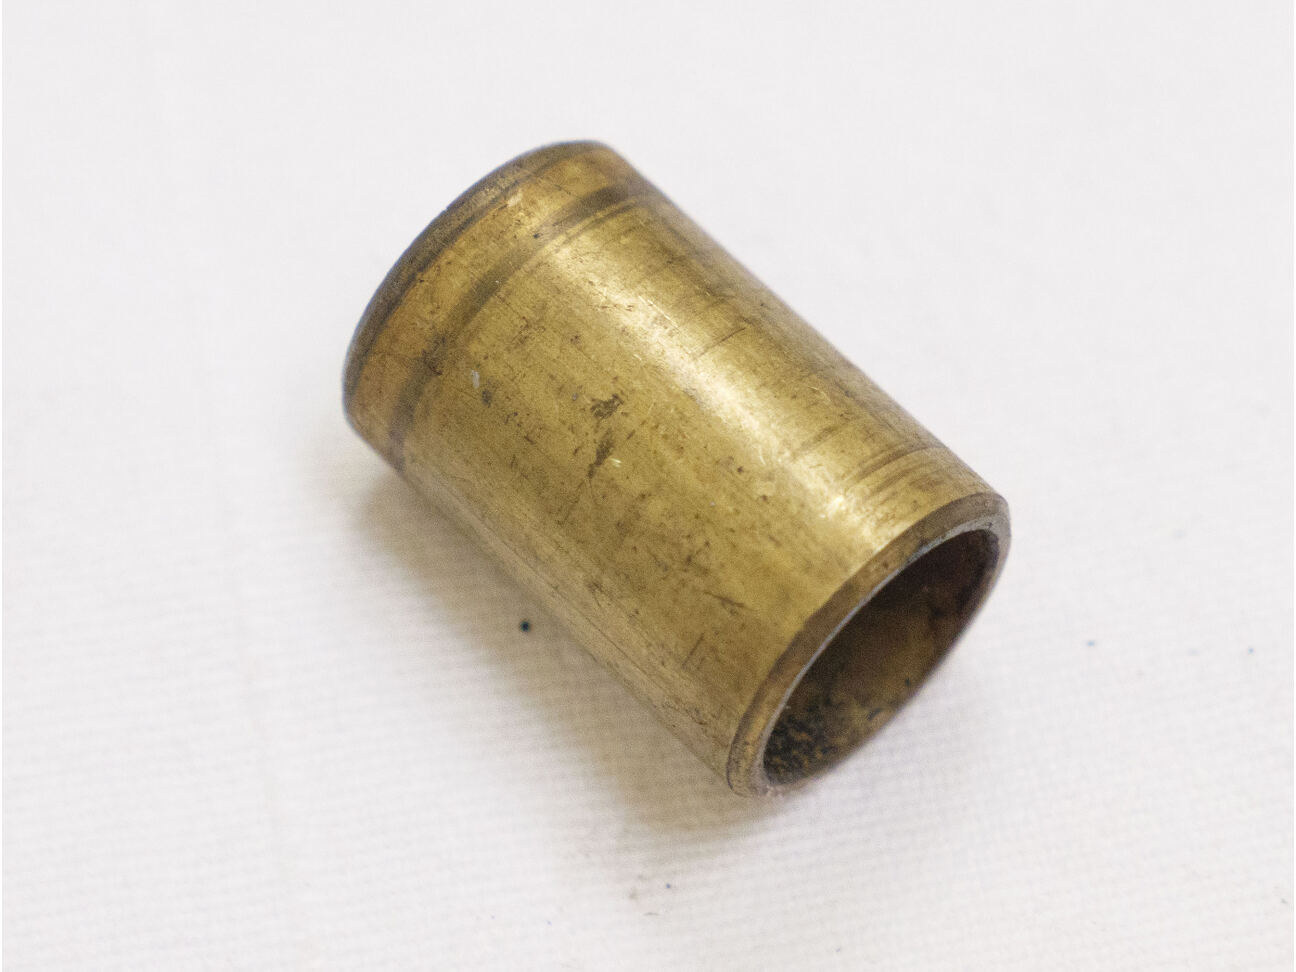 Used good shape sheridan valve sleeve body (brass)